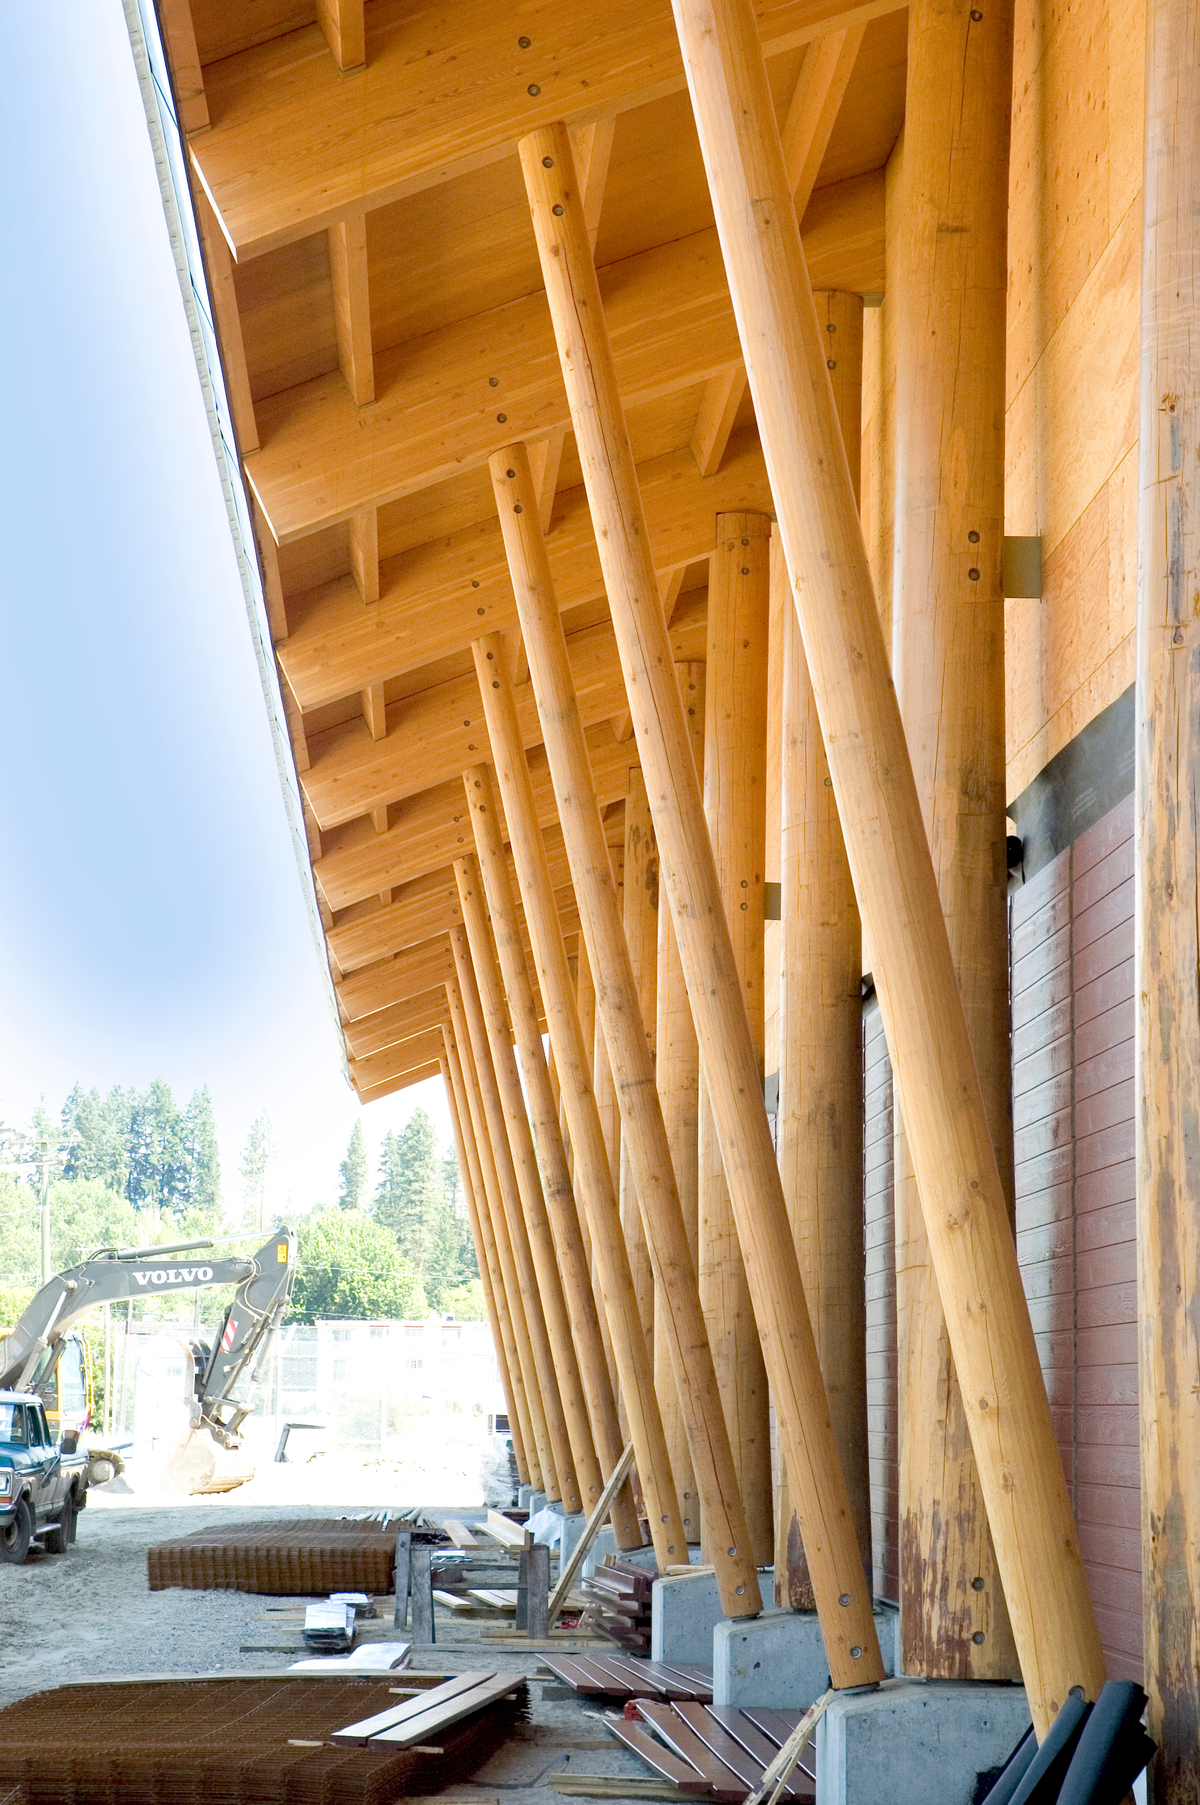 Armstrong-Spallumcheen竞技场正在施工的室外白天视图，显示胶合层压木材(胶合木)水平屋顶梁和道格拉斯冷杉护套的垂直柱子+梁支撑